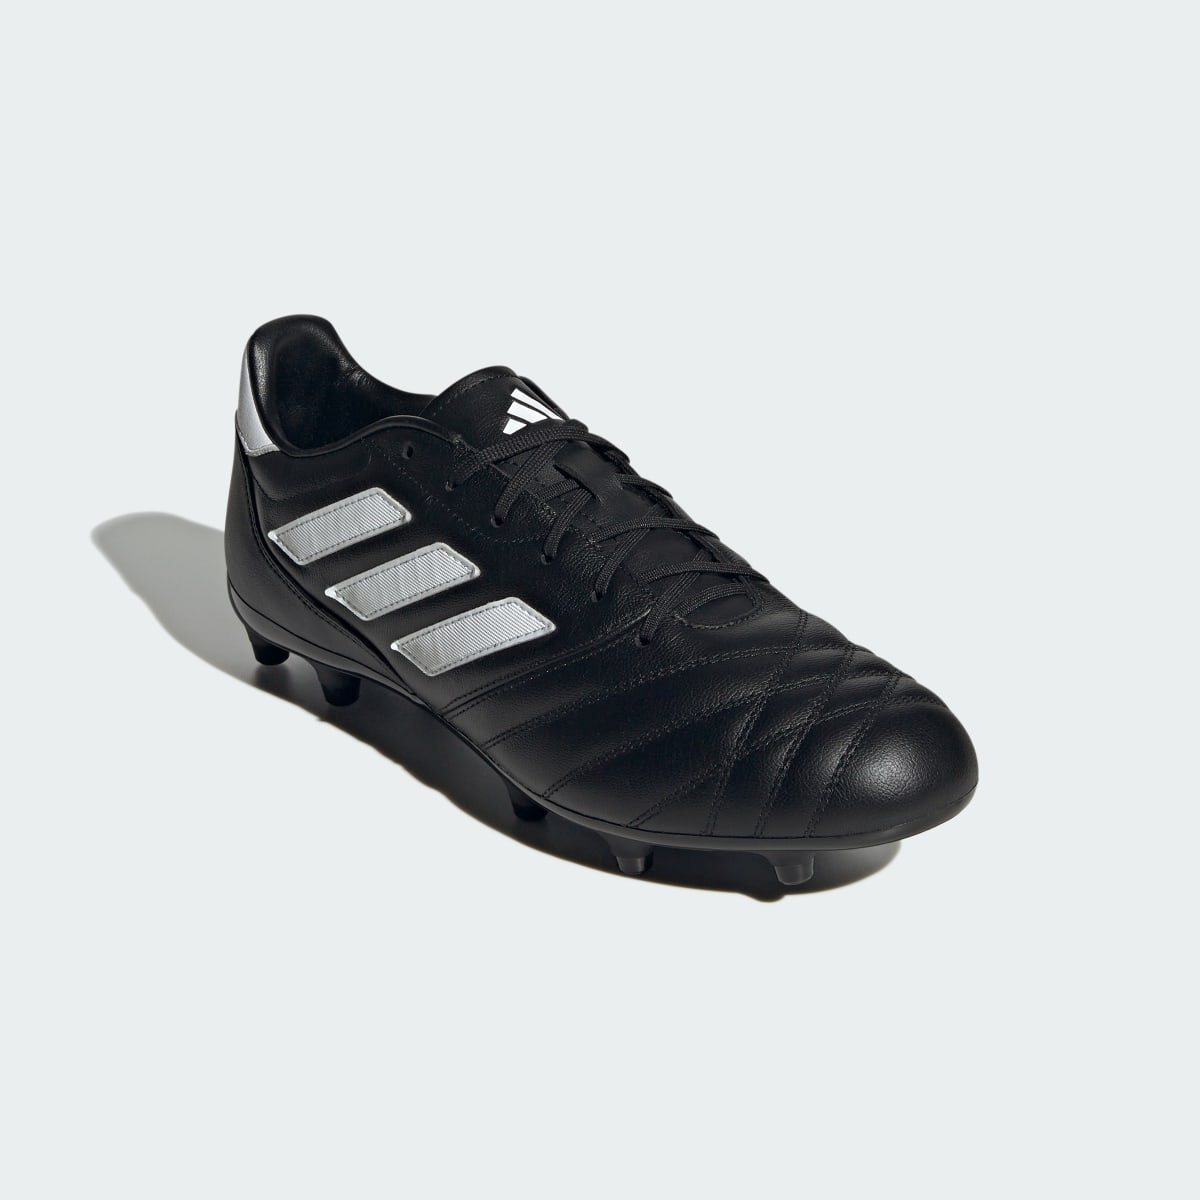 Adidas Copa Gloro Firm Ground Boots. 5